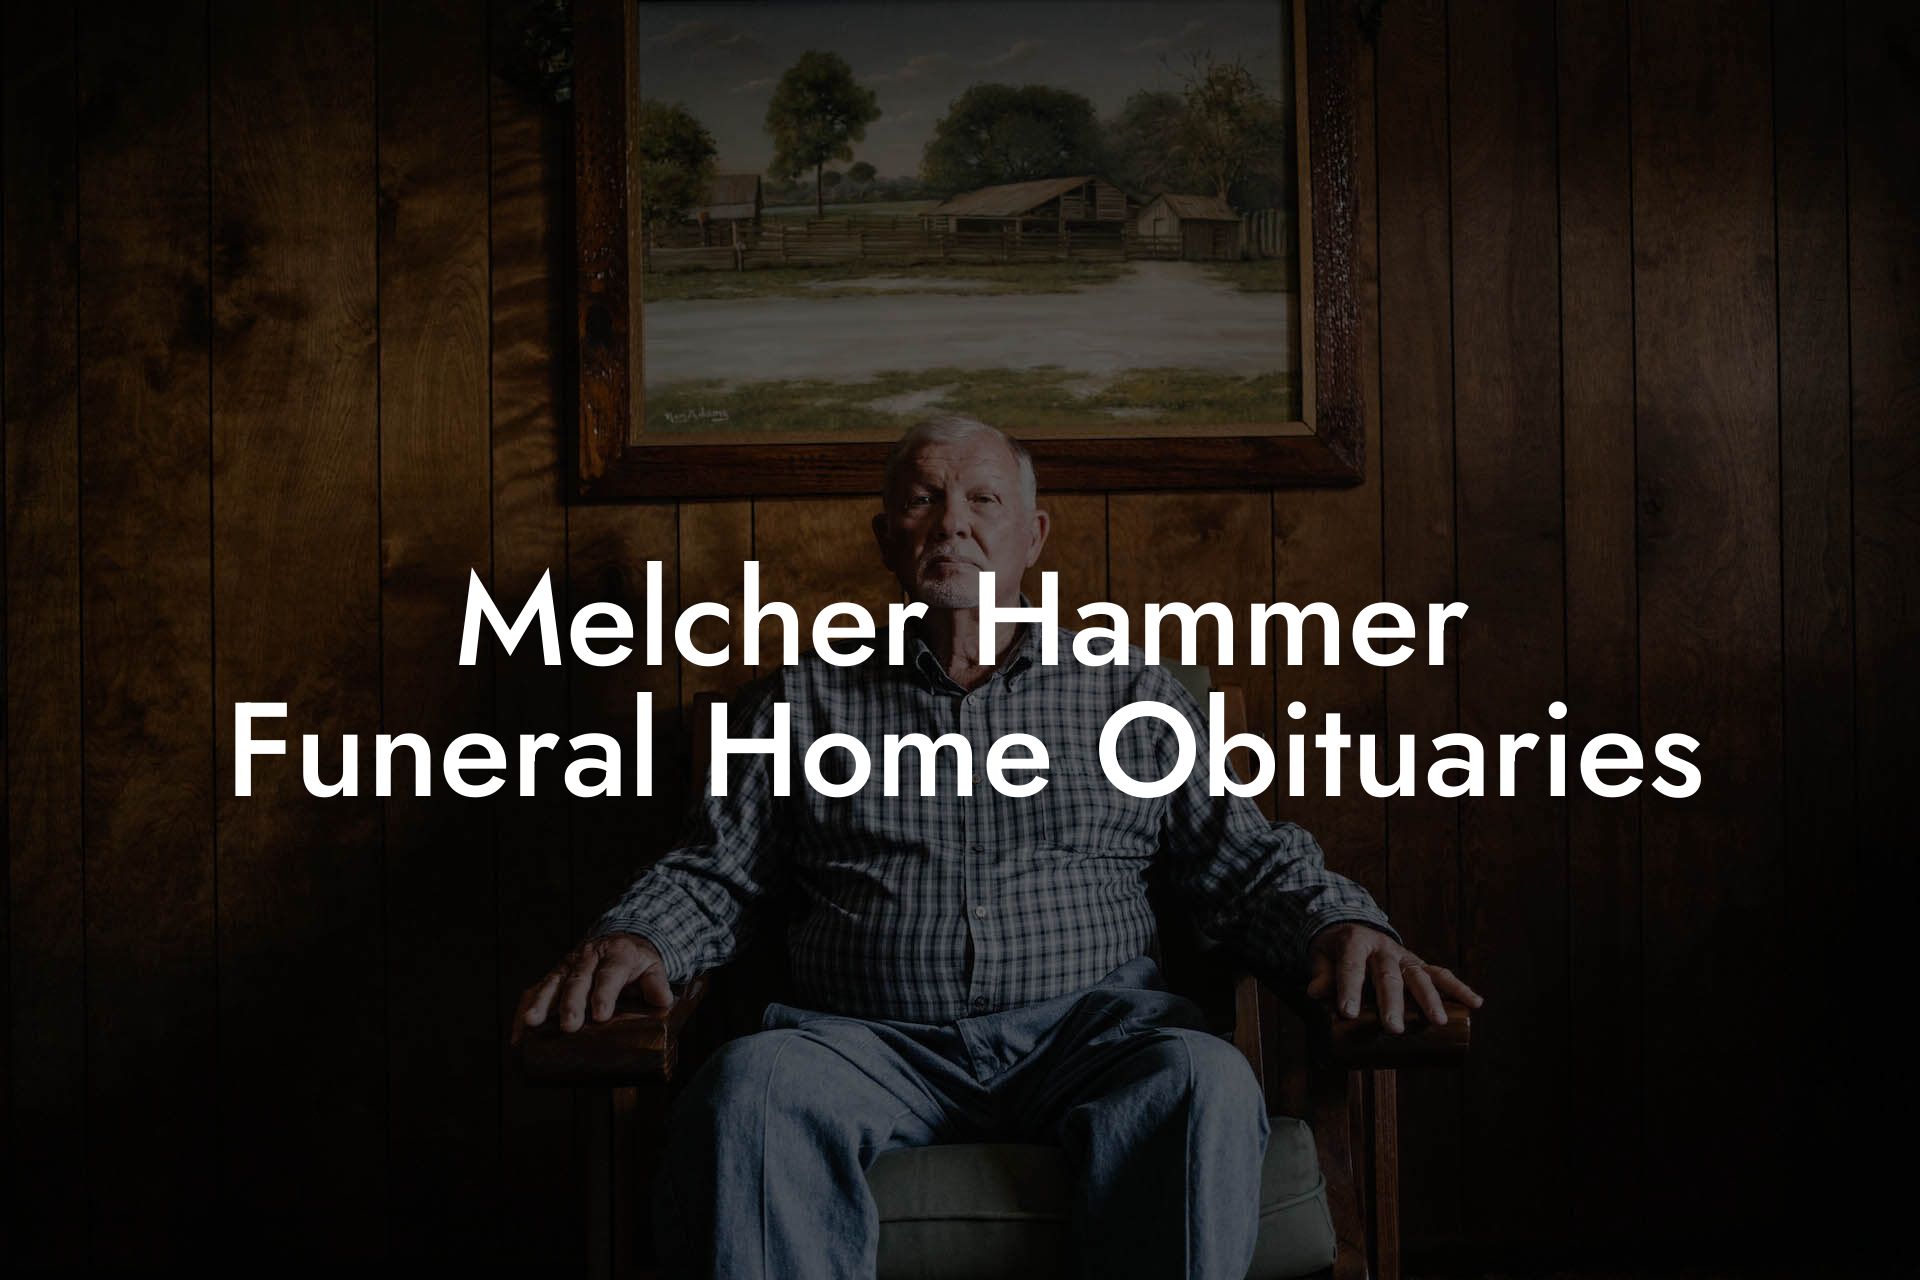 Melcher Hammer Funeral Home Obituaries